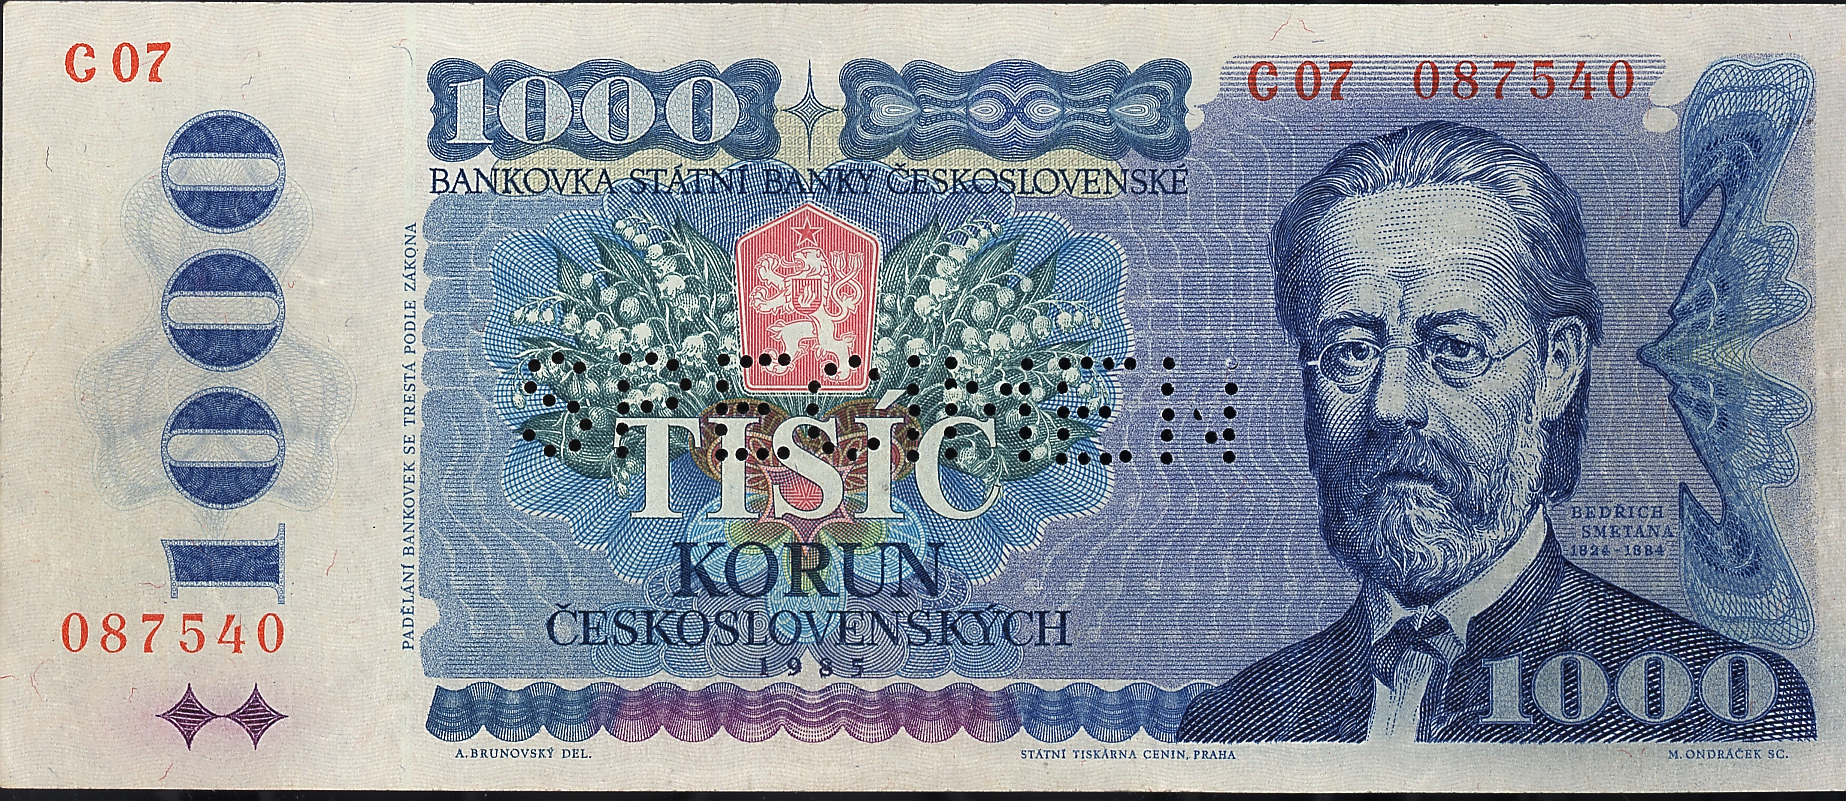 30 rokov slobody slovenská koruna